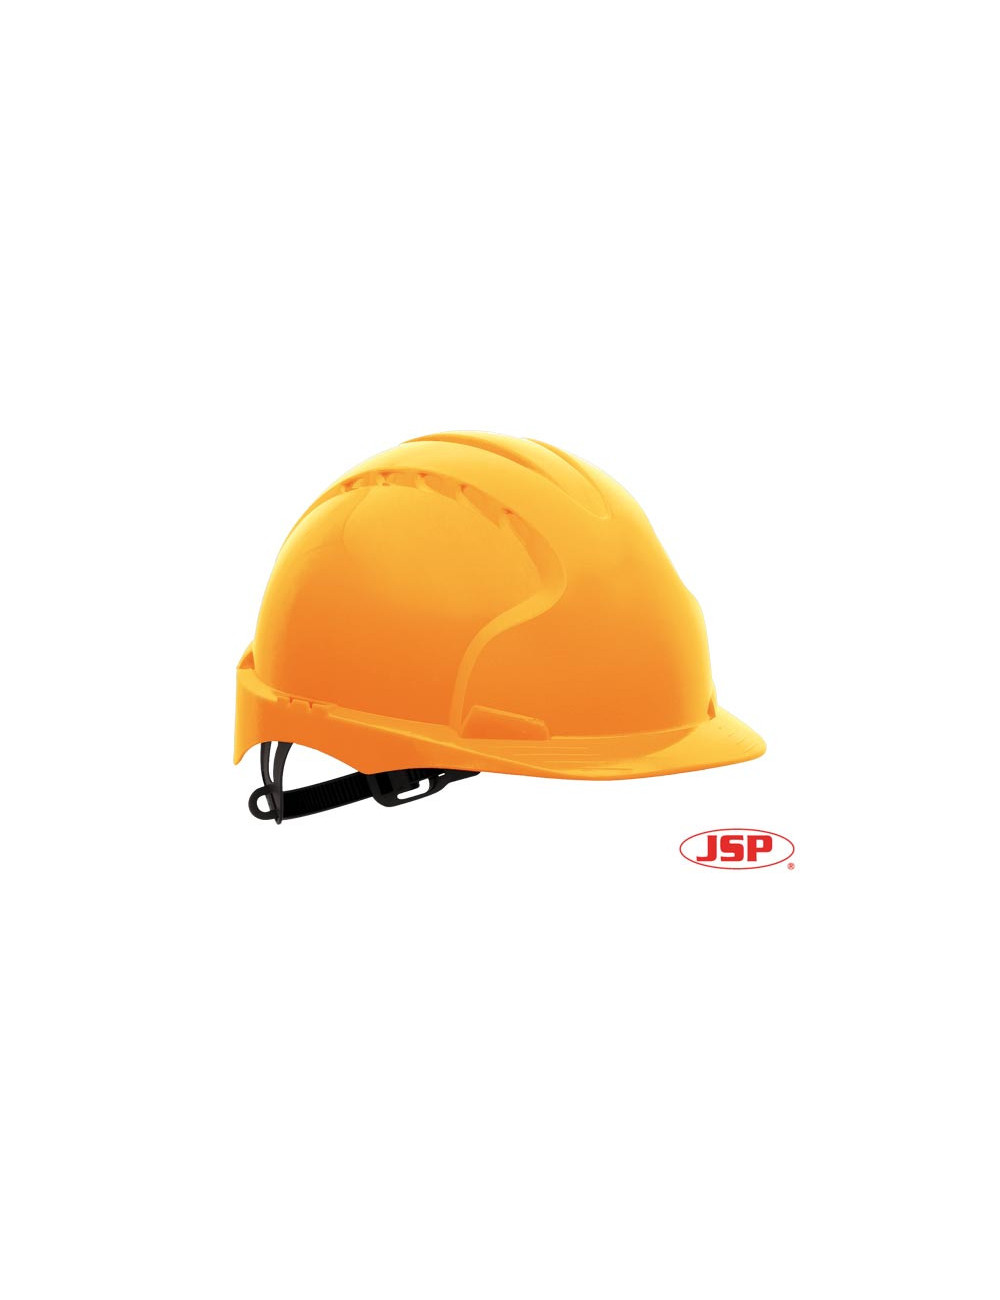 Protective helmet kas-evo3 p orange Jsp